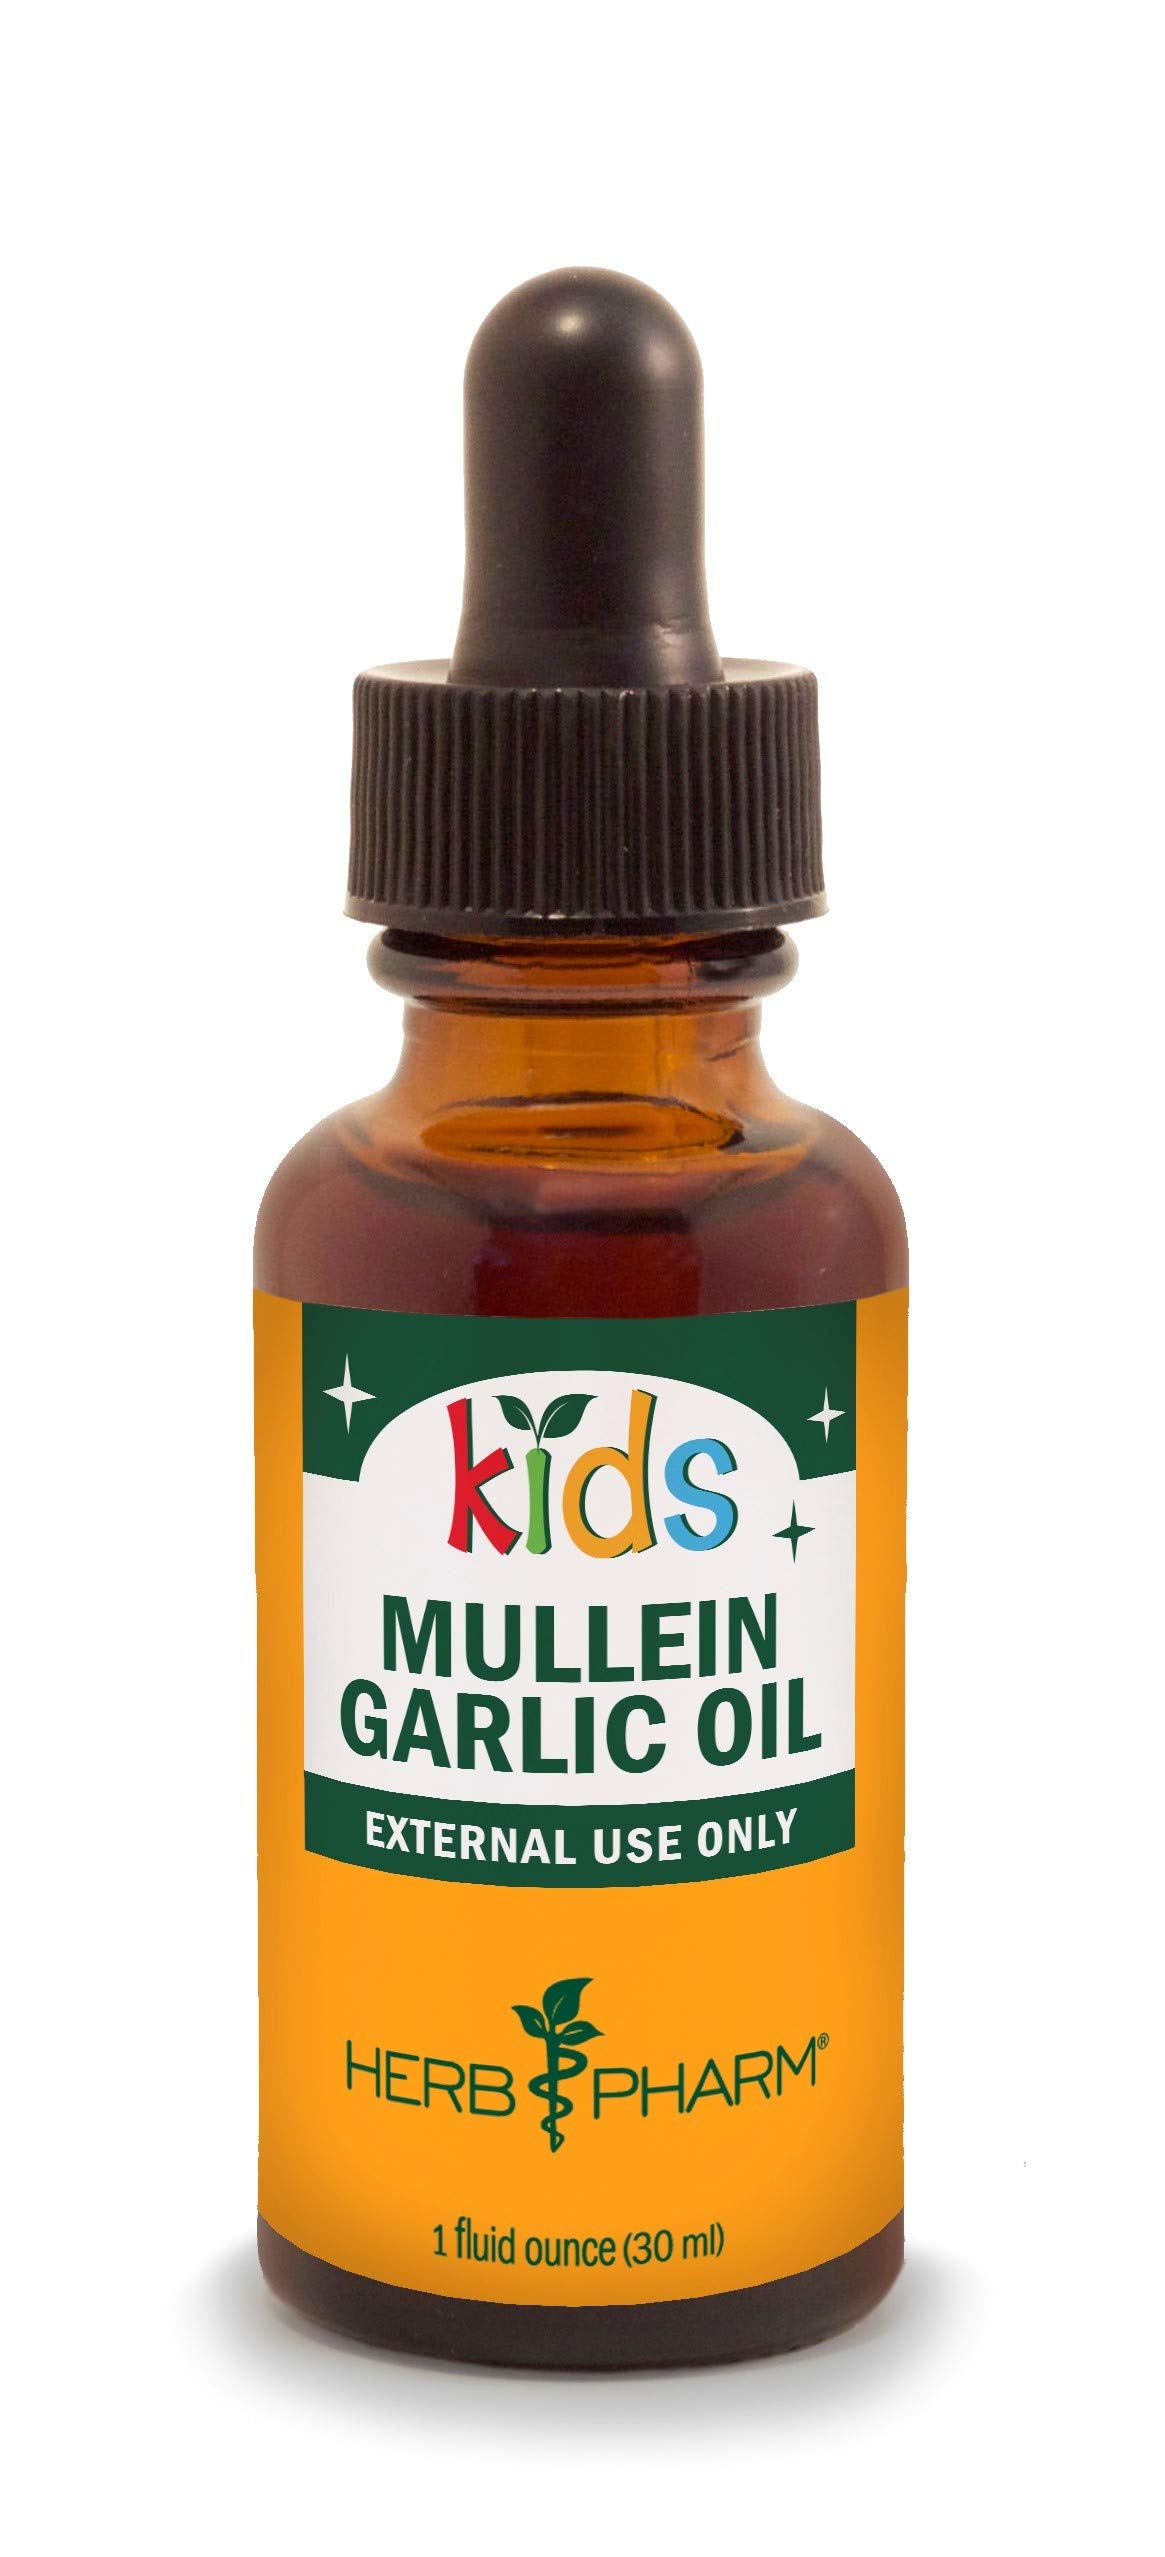 Mullein and Garlic Oil